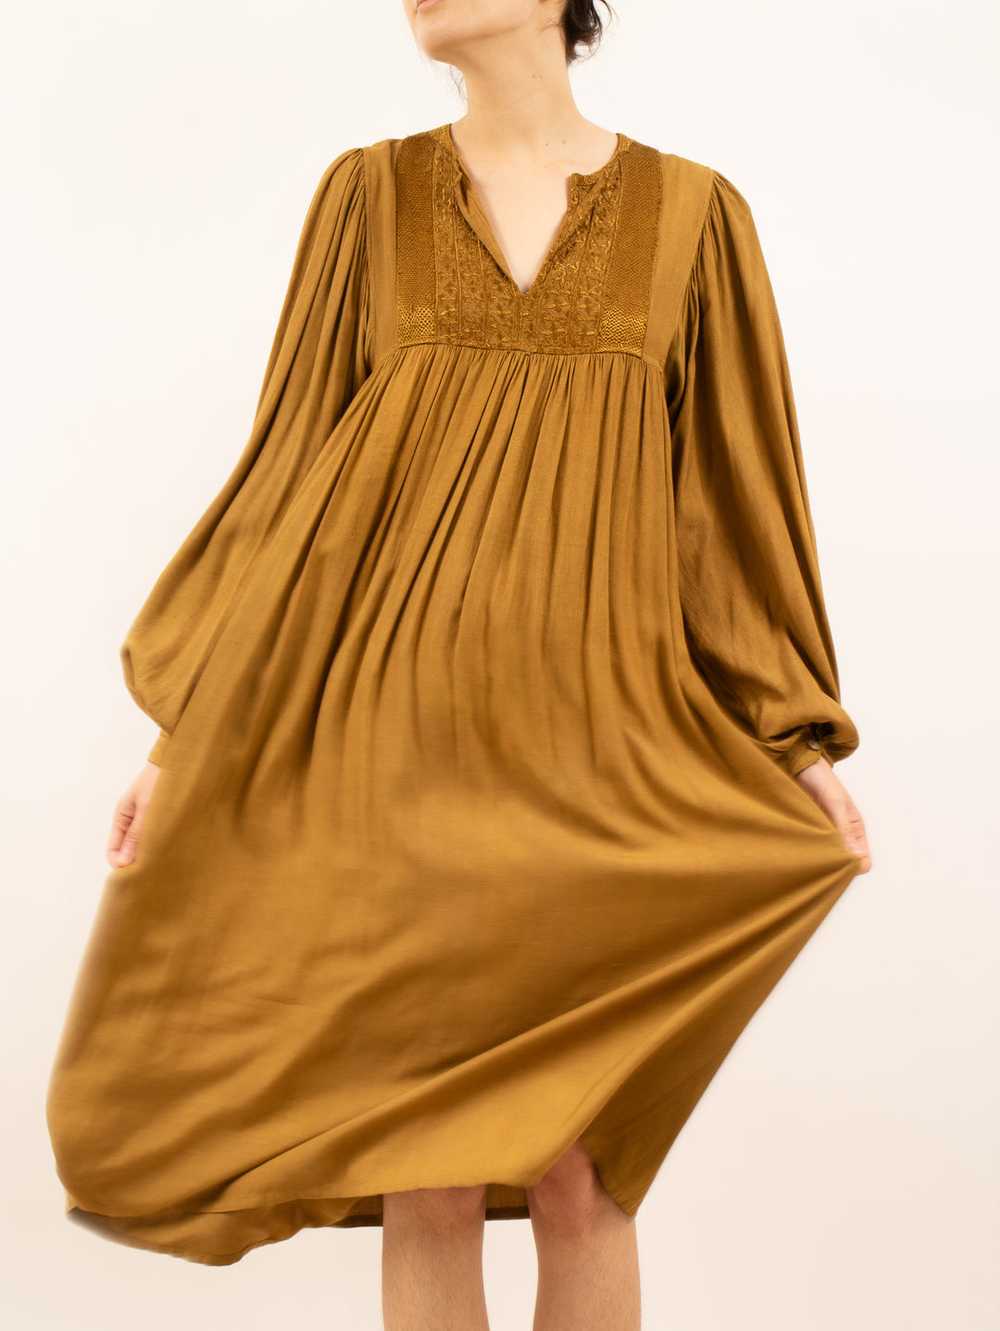 1970's golden caftan dress - image 9